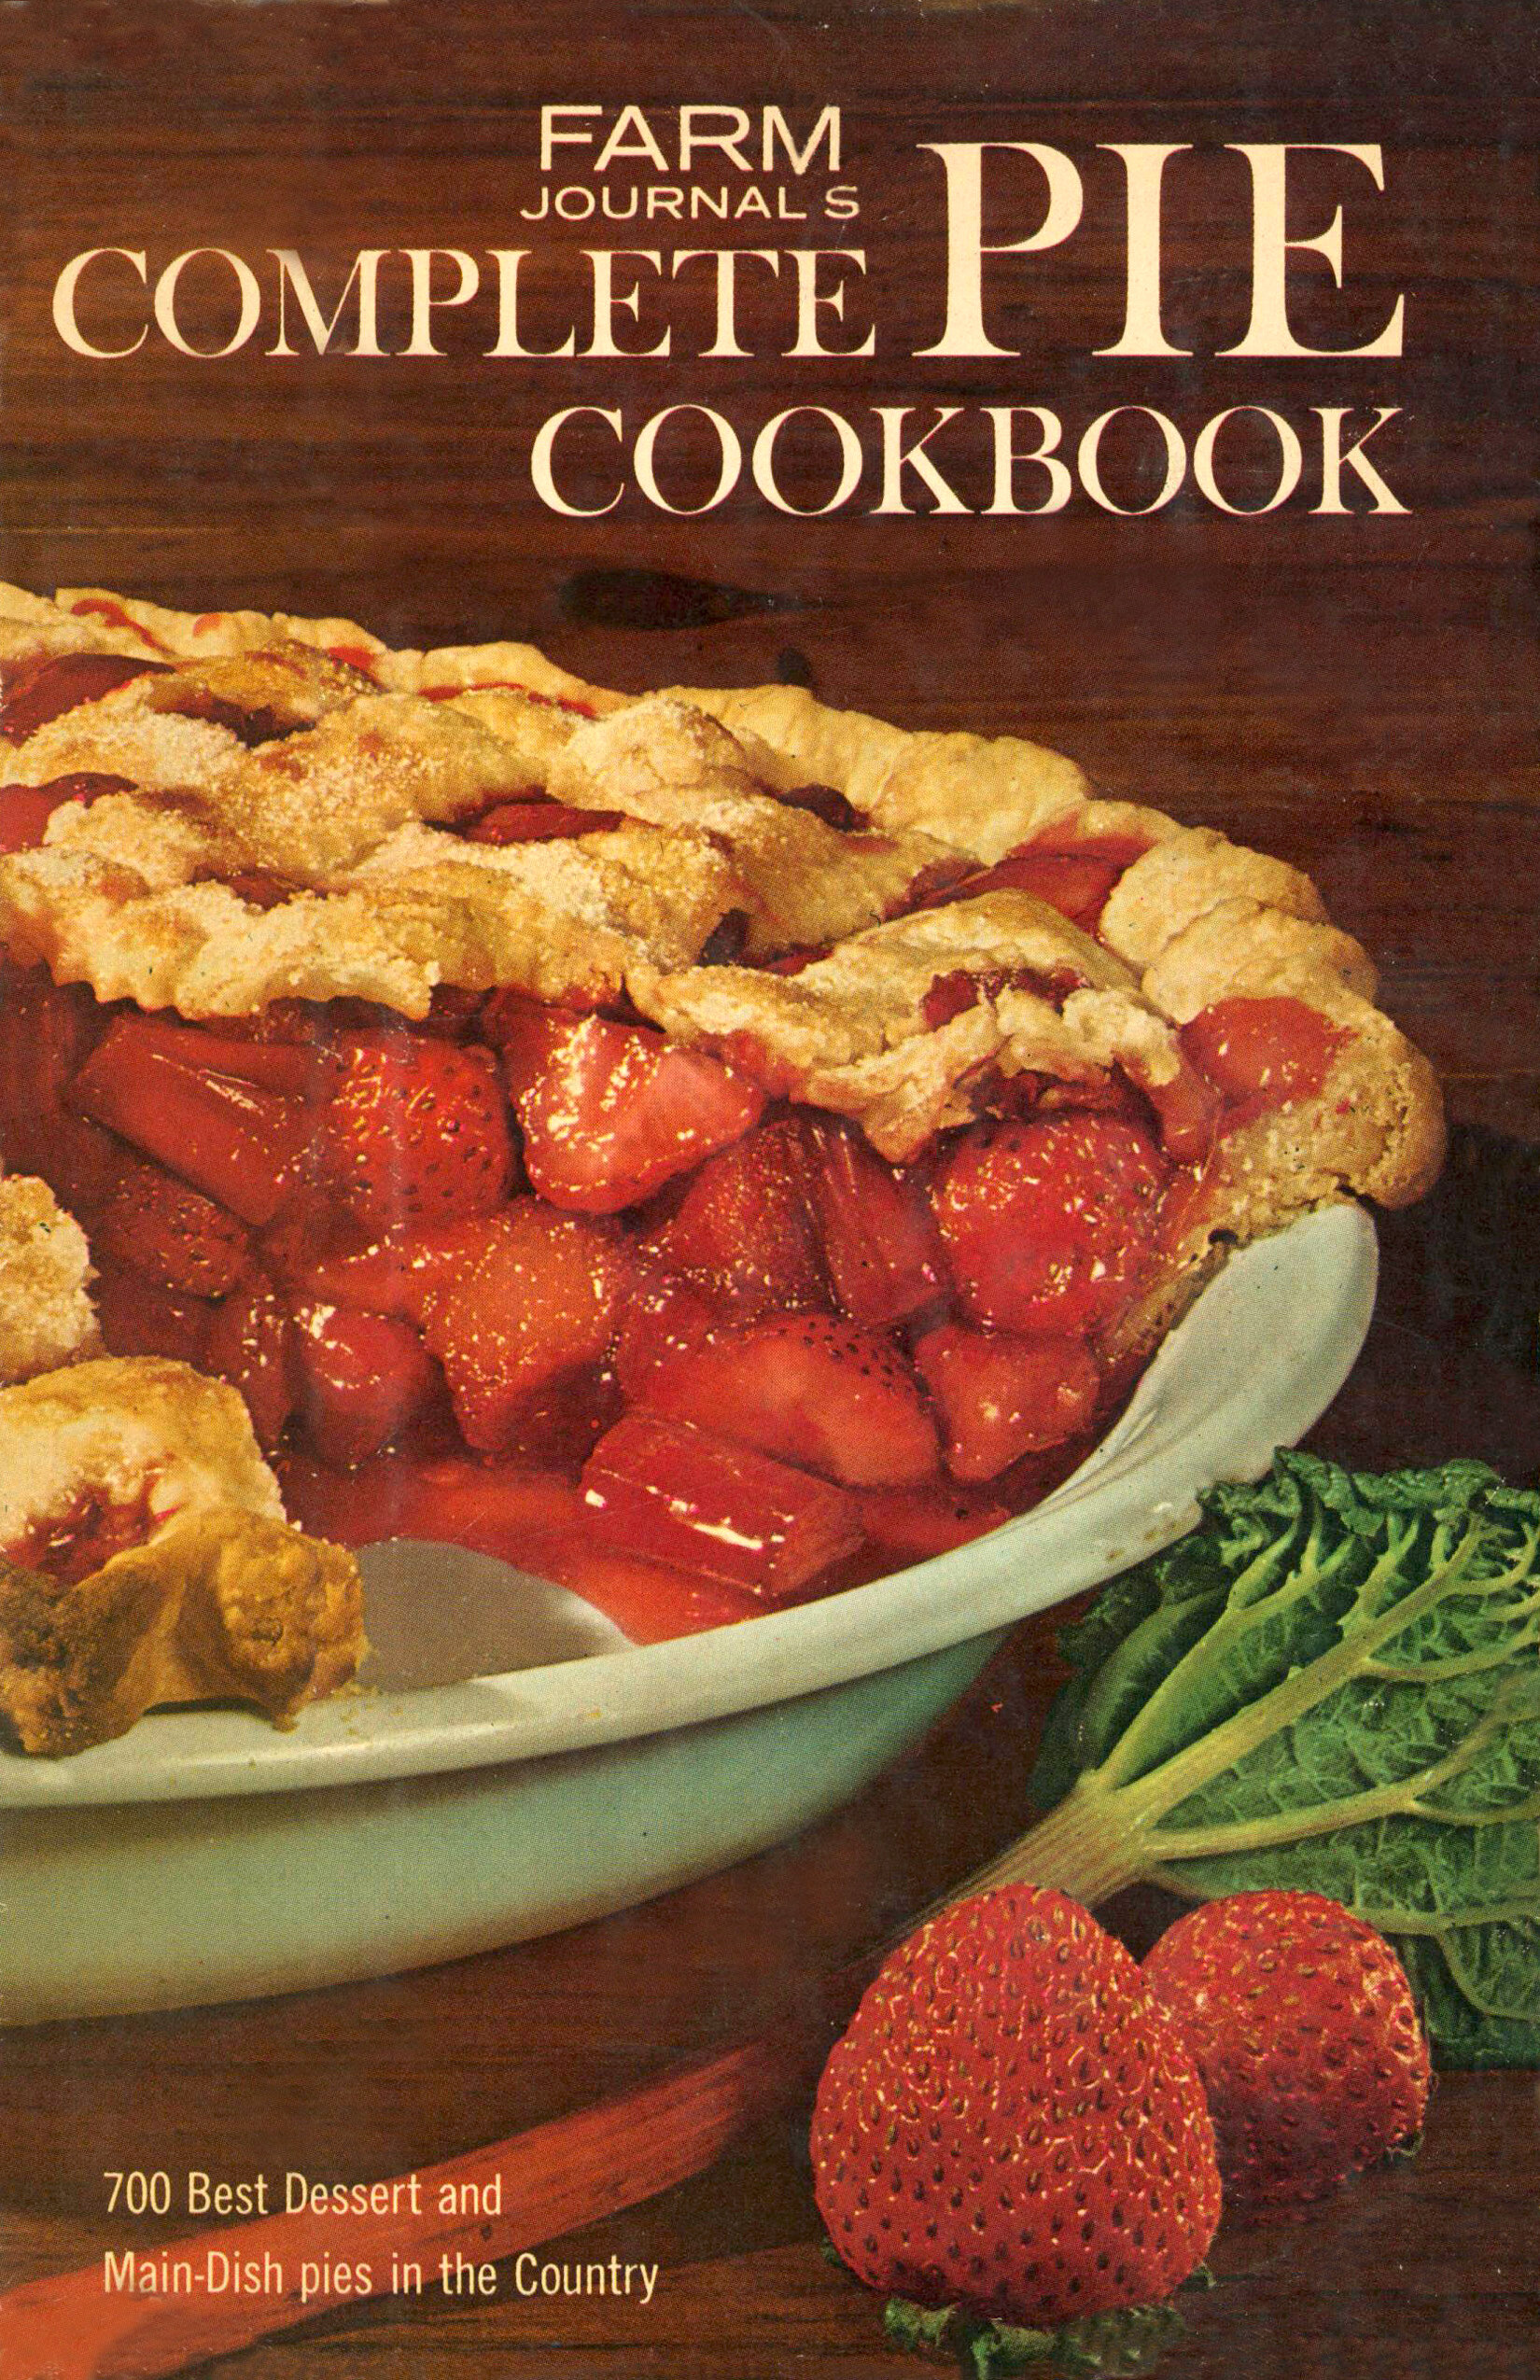 Behind The Cookbook: Farm Journal’s Complete Pie Cookbook